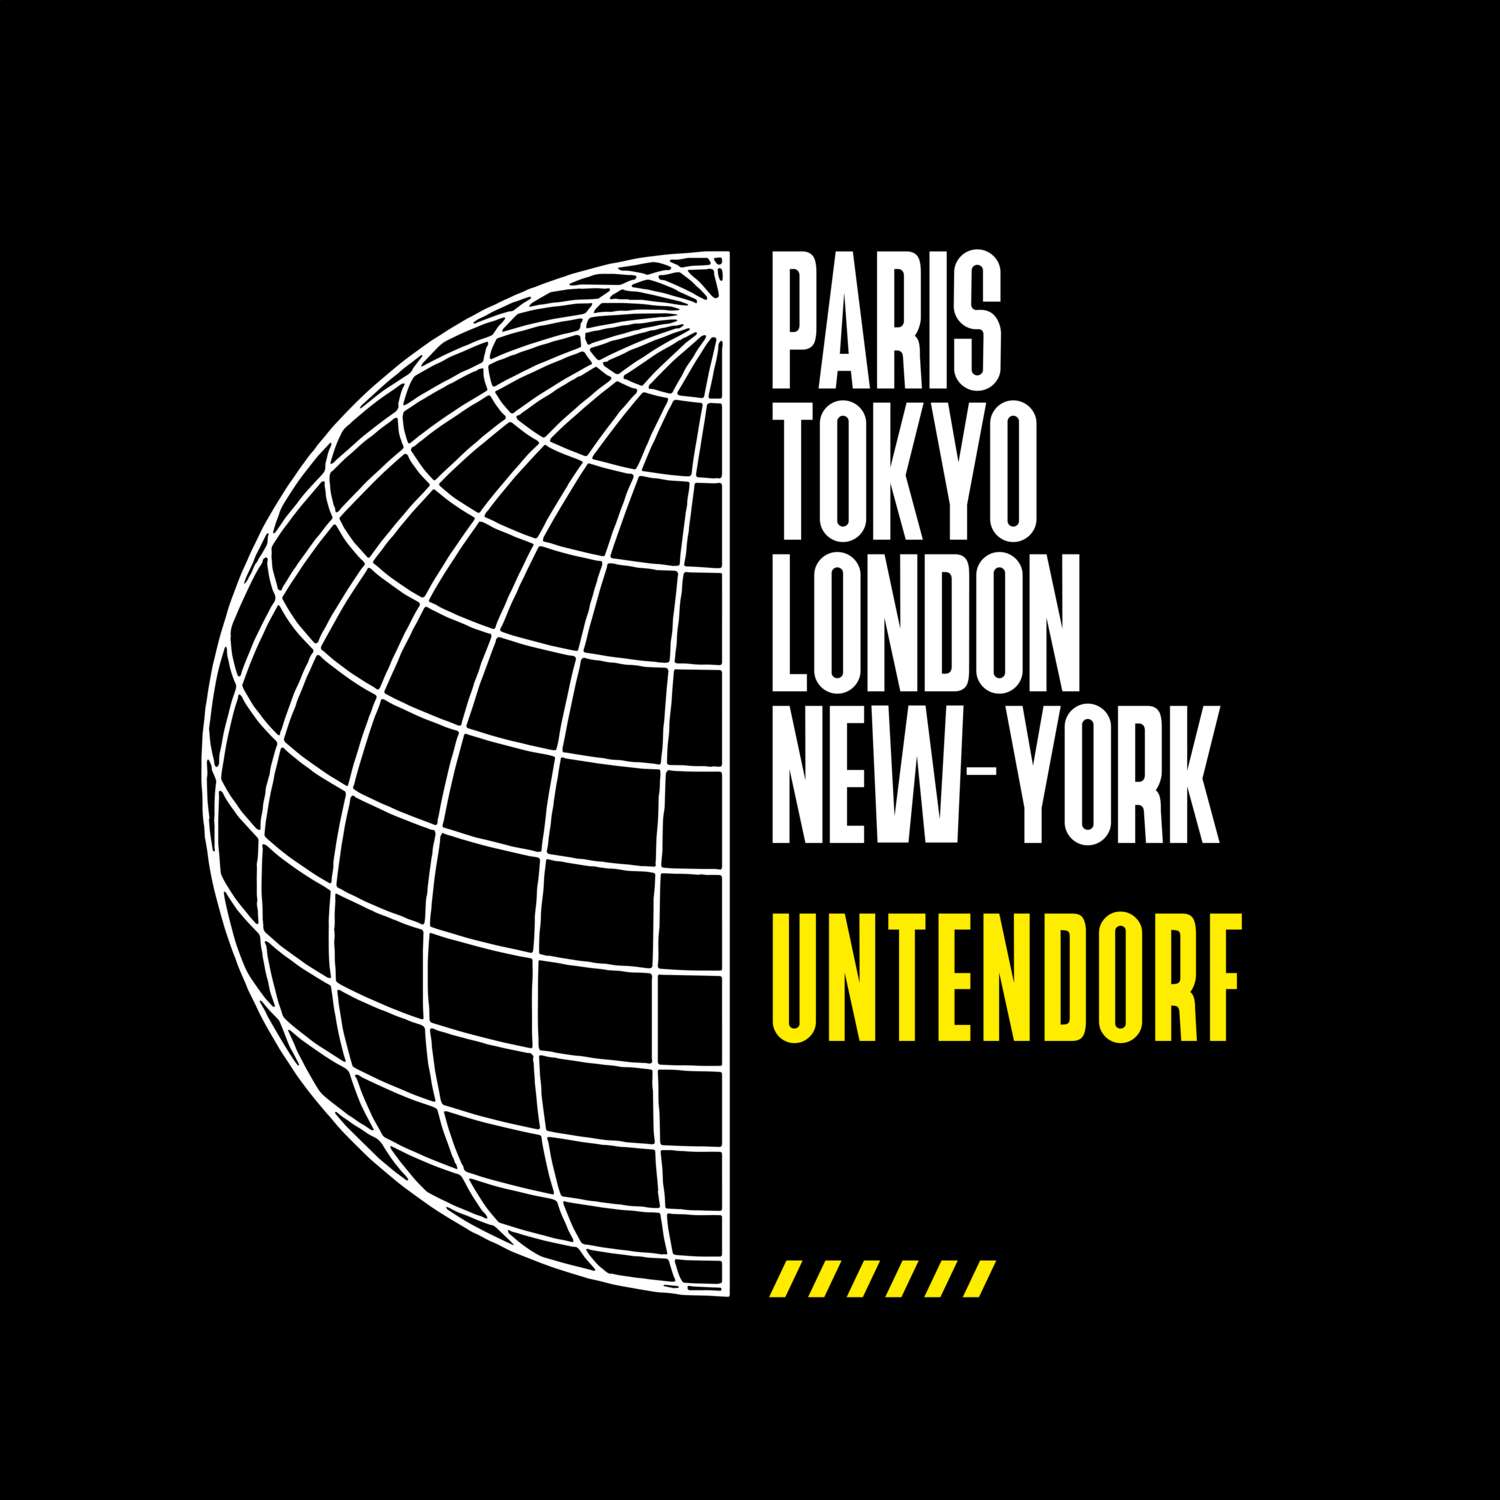 Untendorf T-Shirt »Paris Tokyo London«